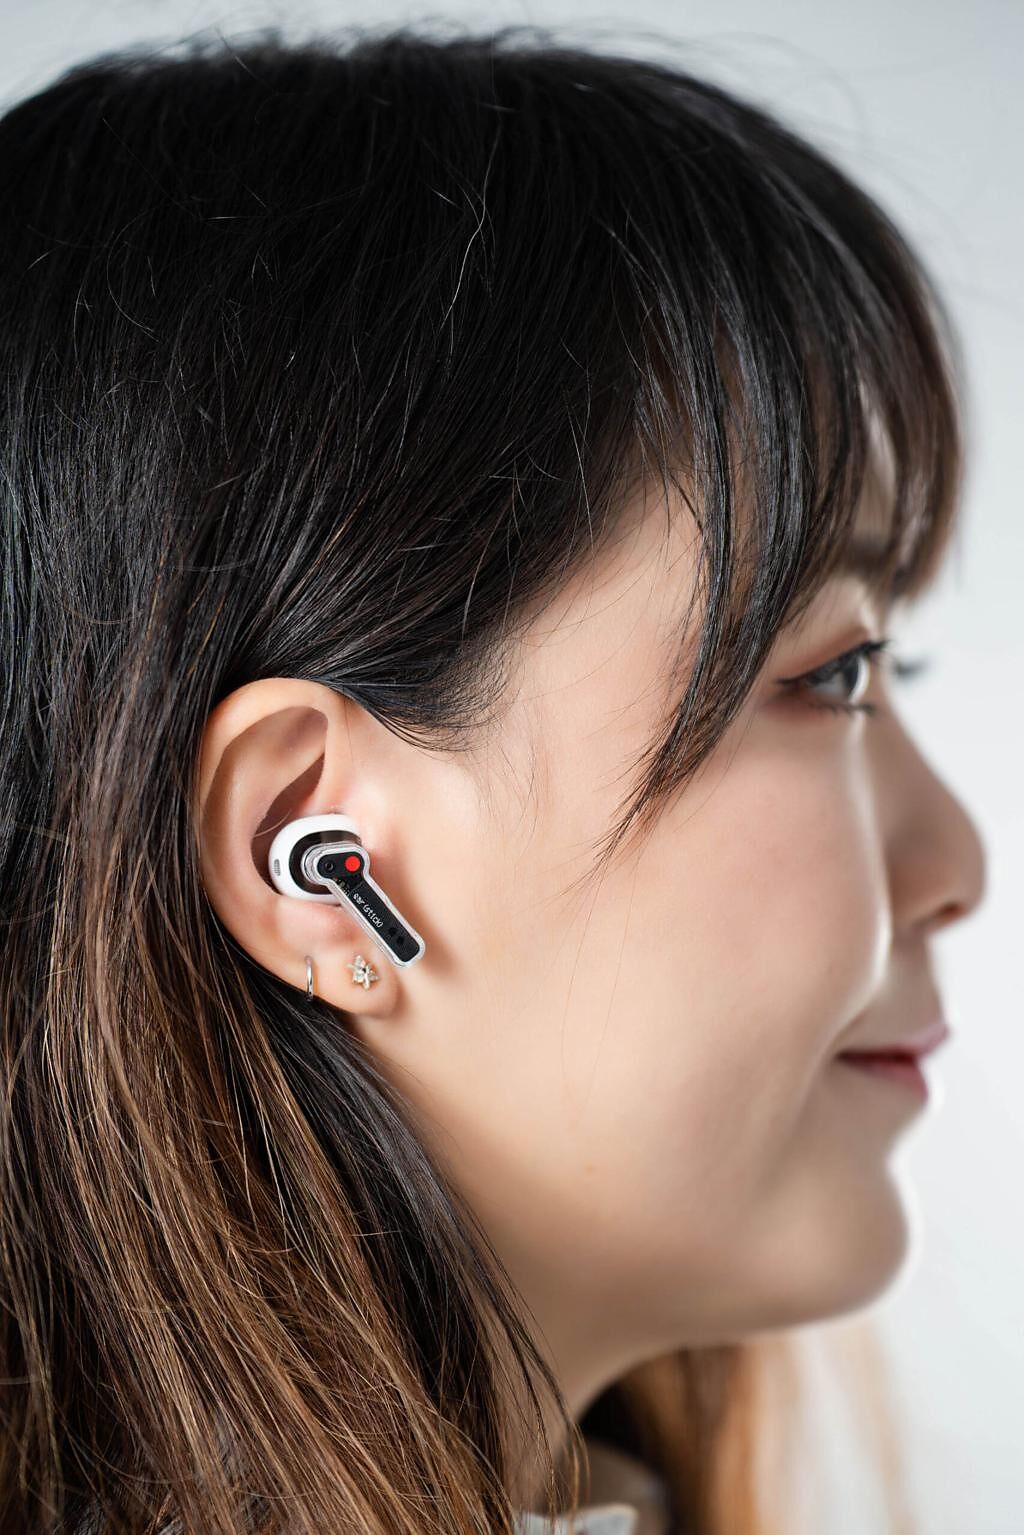 Nothing Ear (stick)外型上可是最新潮的一款，採半入耳式的耳機機身設計，對耳道的侵入感更低。（石智中攝）